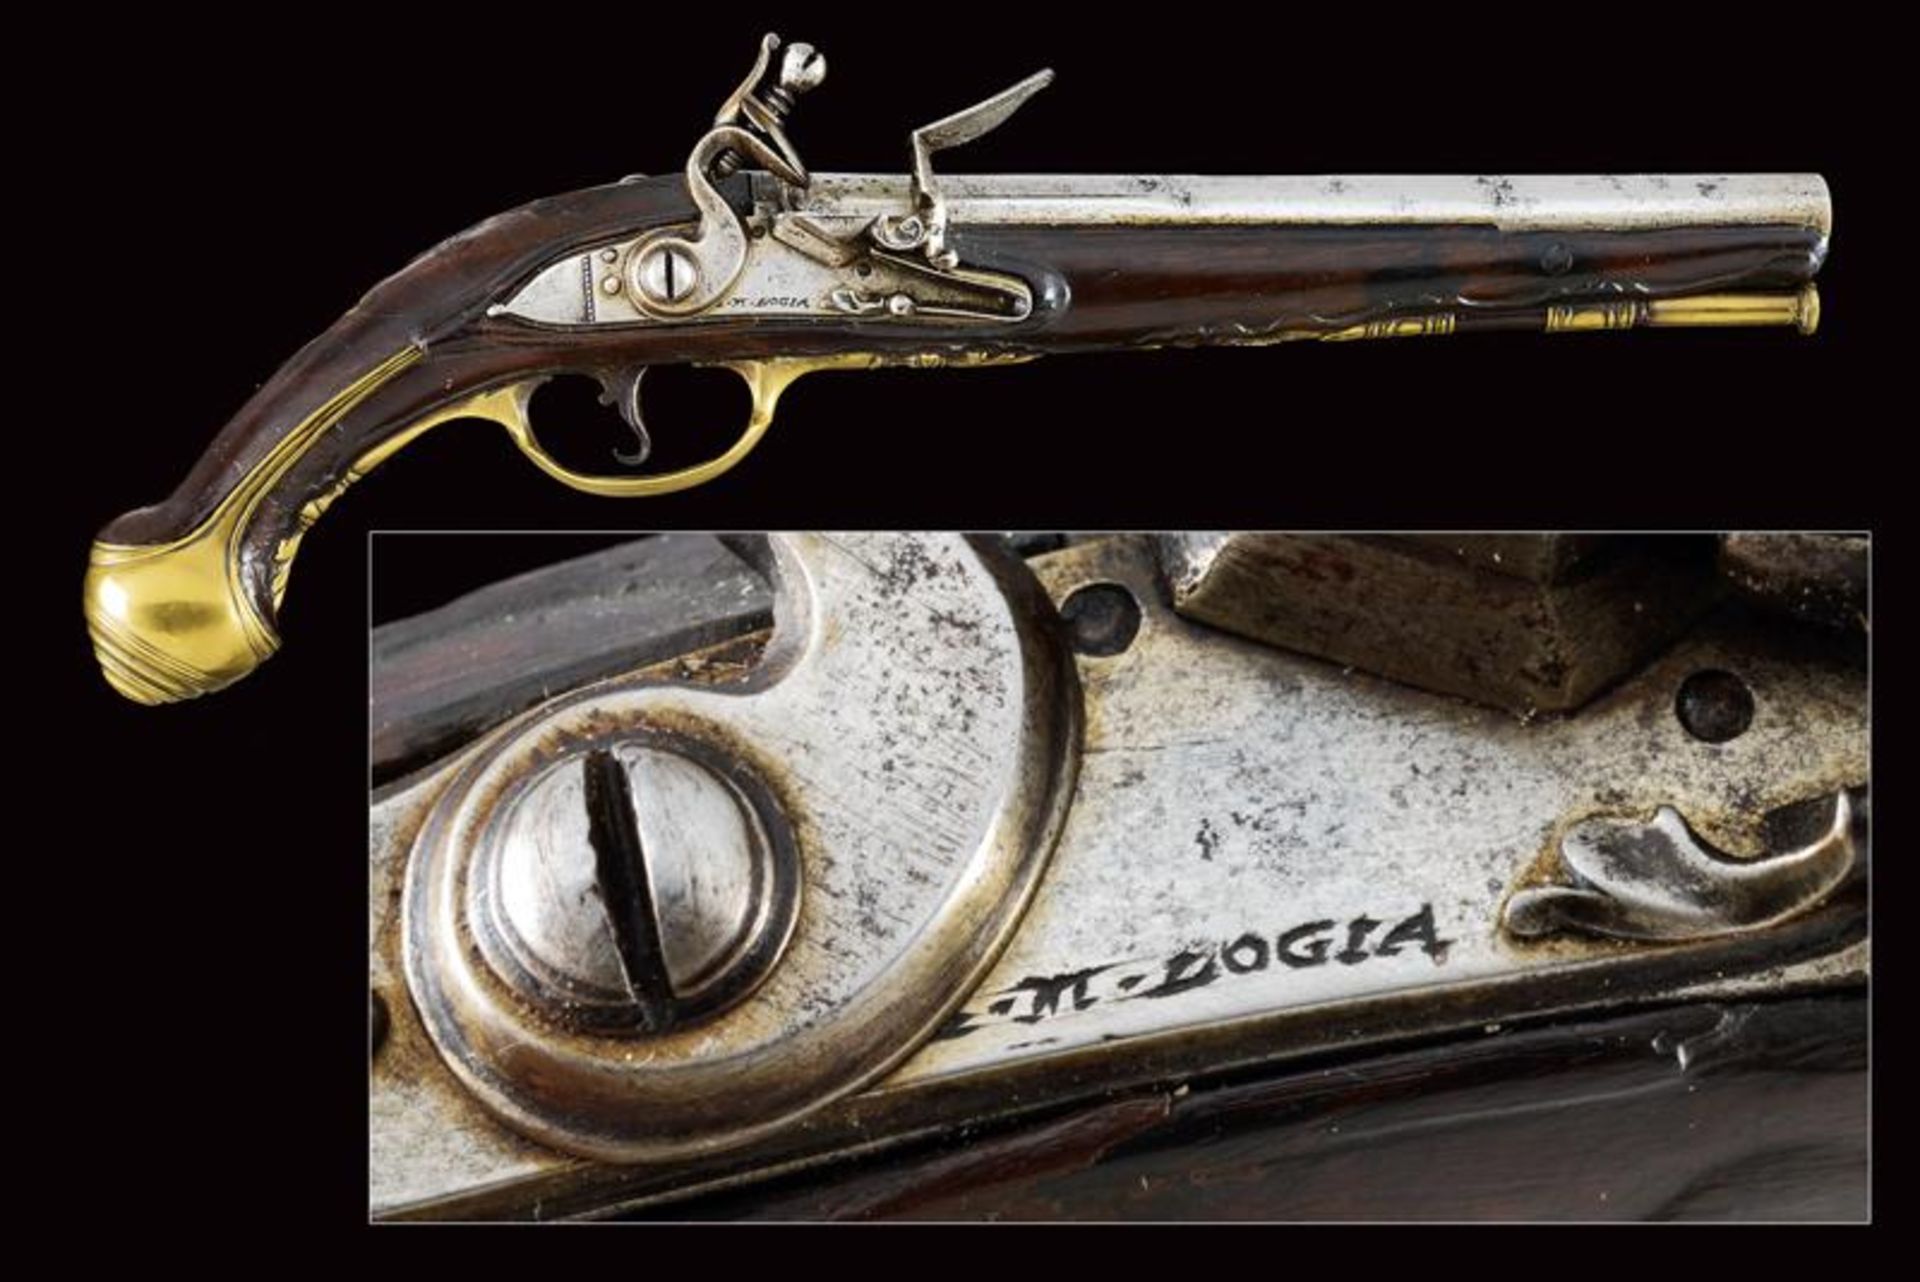 A flintlock pistol signed G.M. Logia (Loggia)